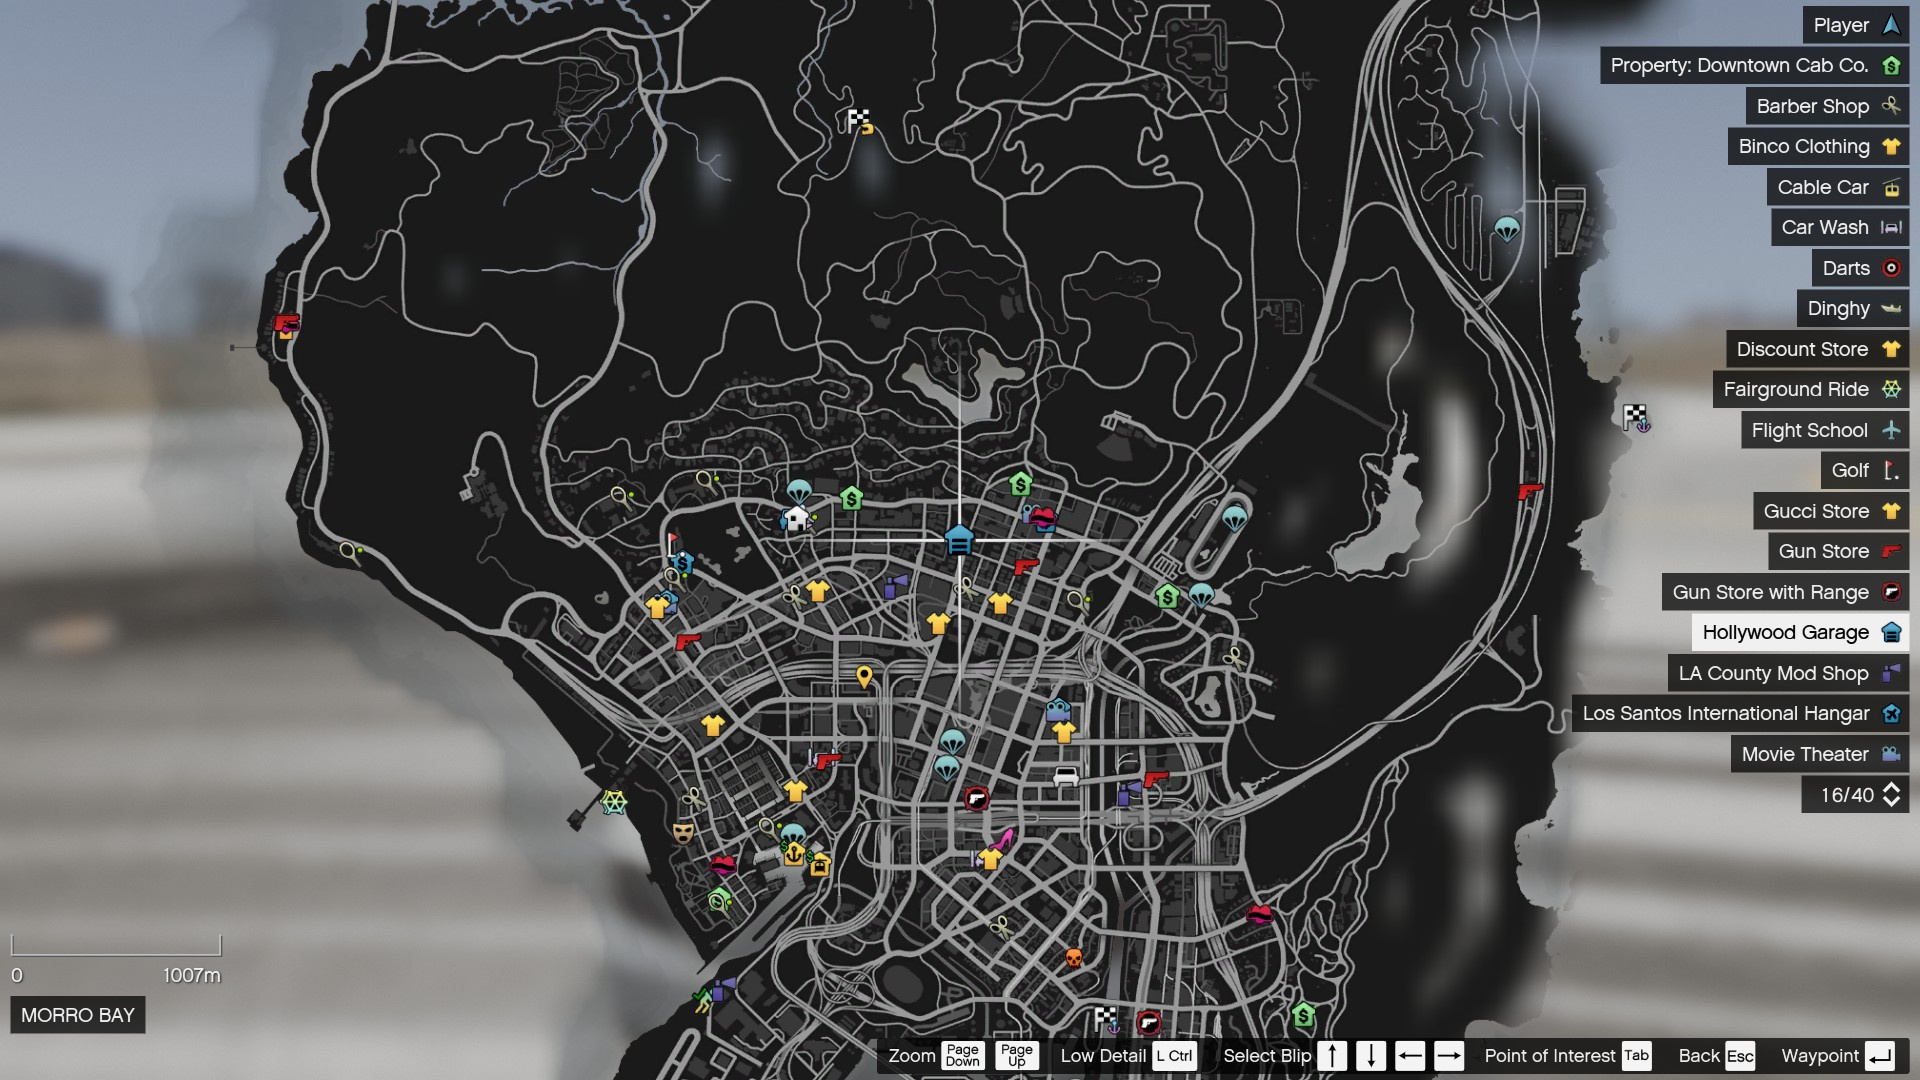 GTA 5 Locations Based On Real-Life